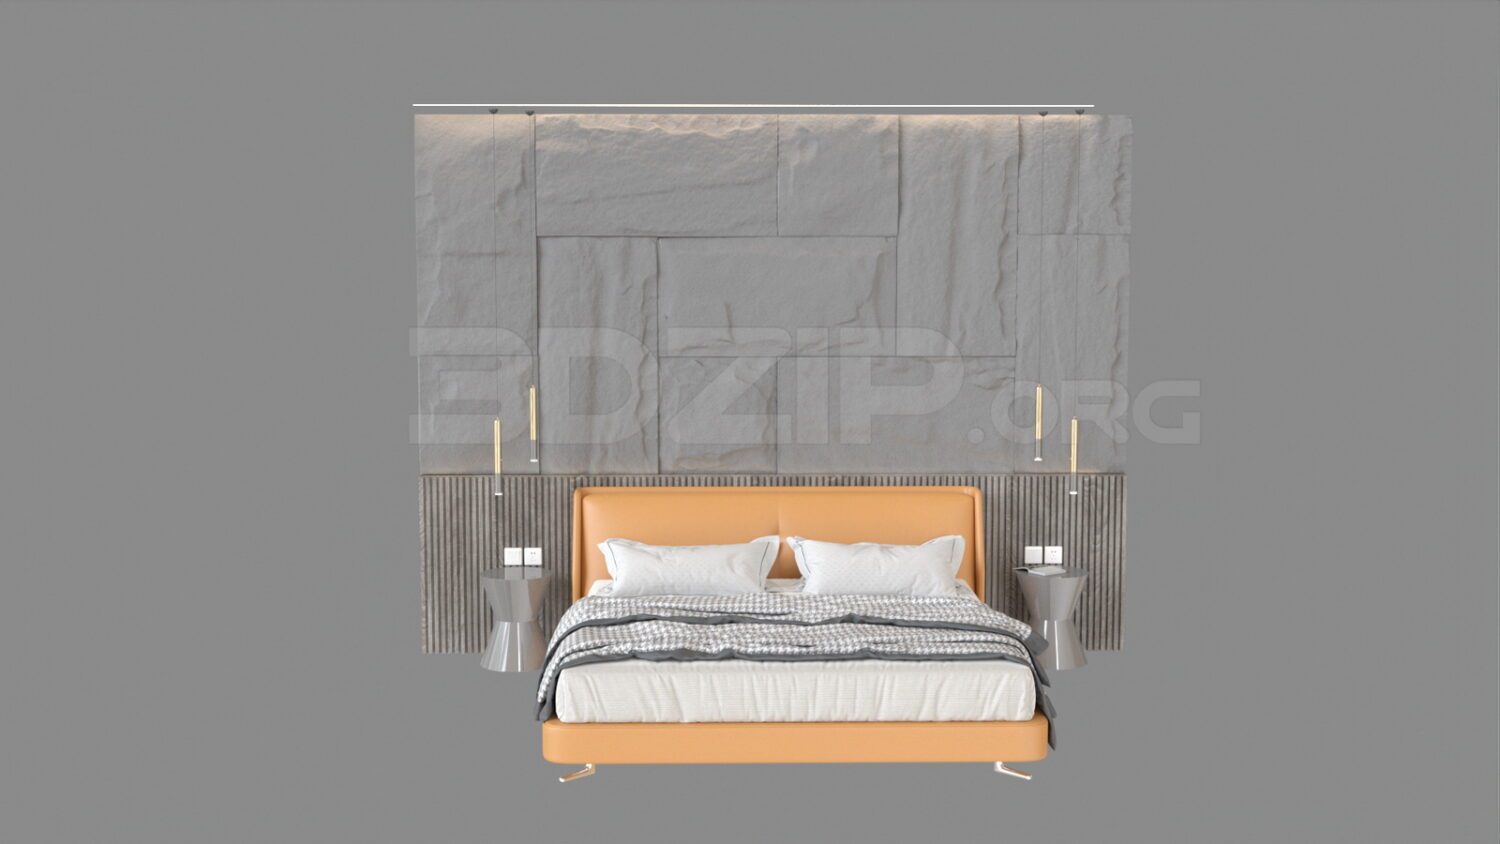 4287. Free 3D Bed Model Download